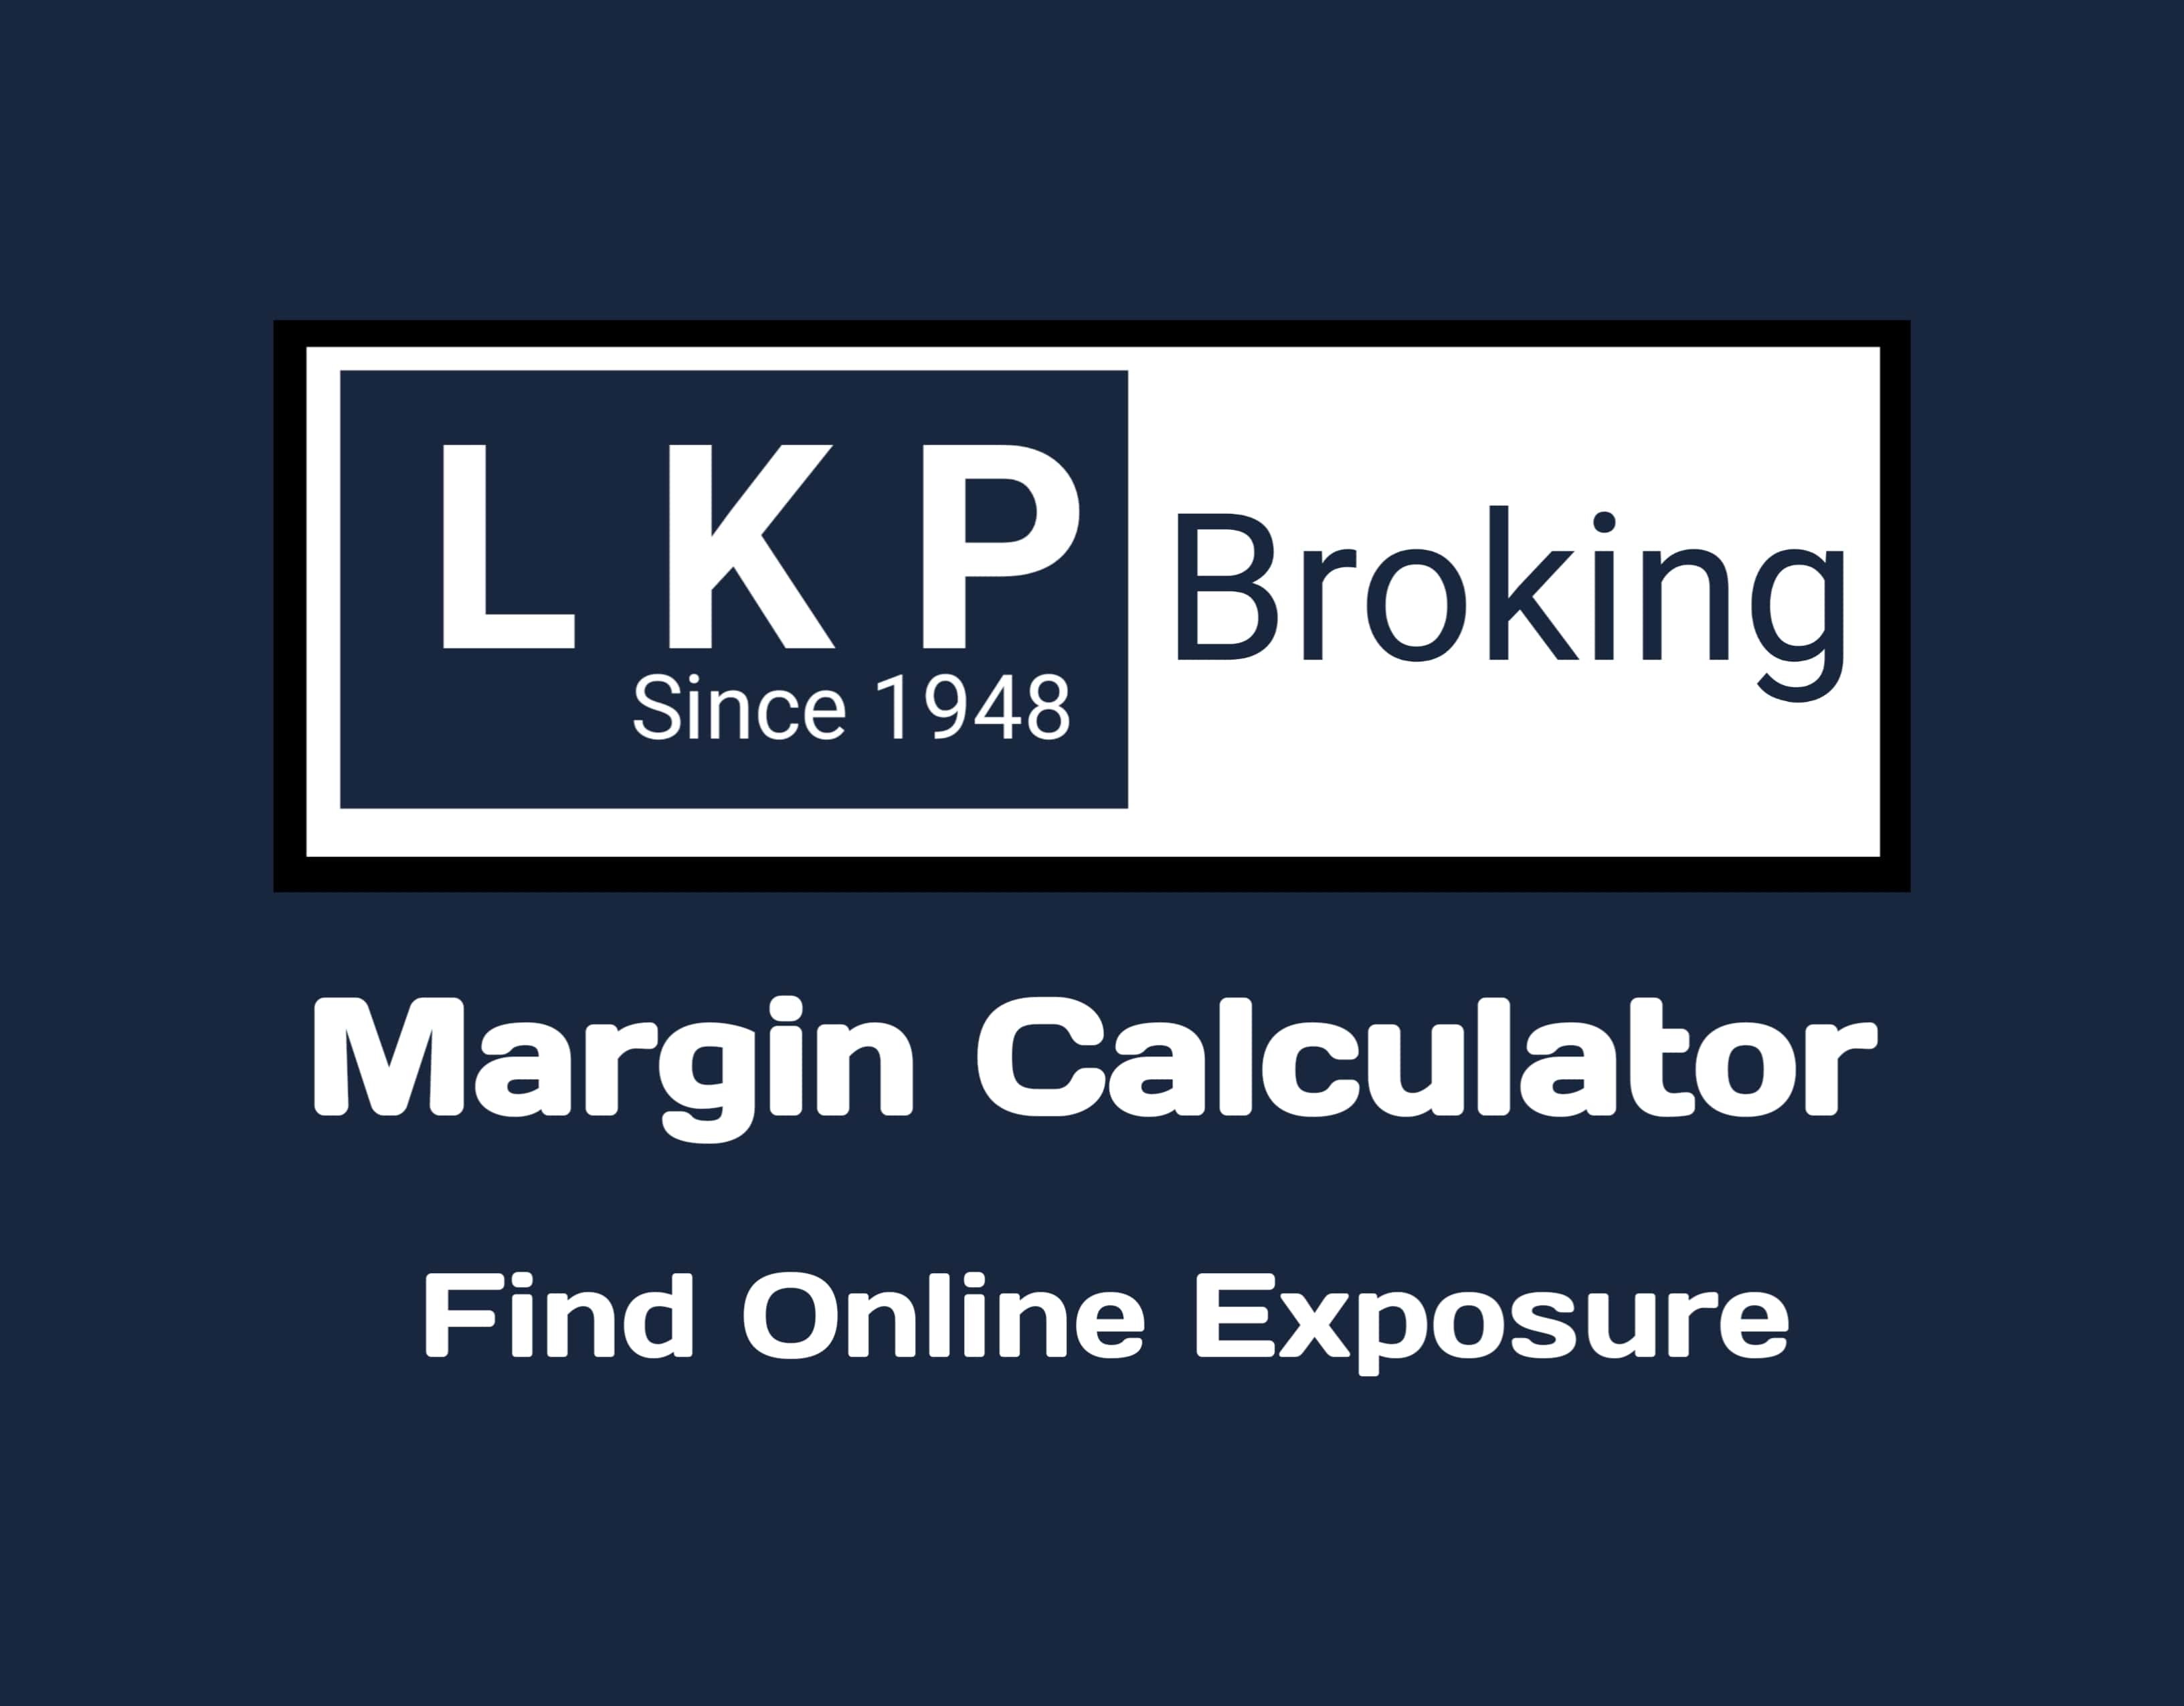 LKP Securities Margin Calculator